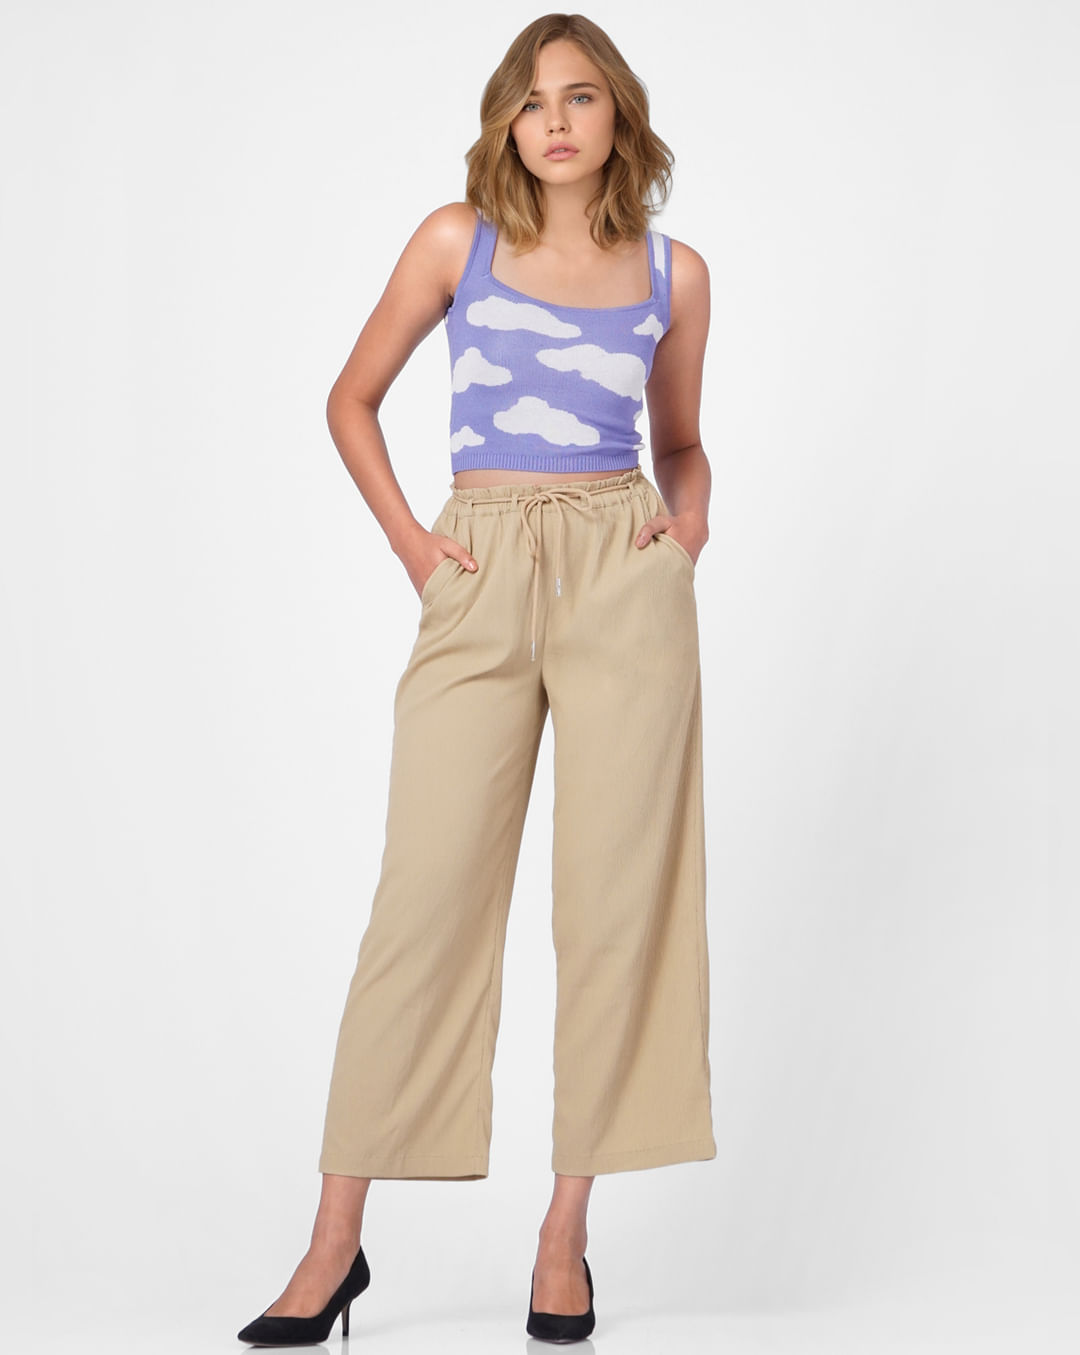 Buy Beige Textured Pants for Women, ONLY